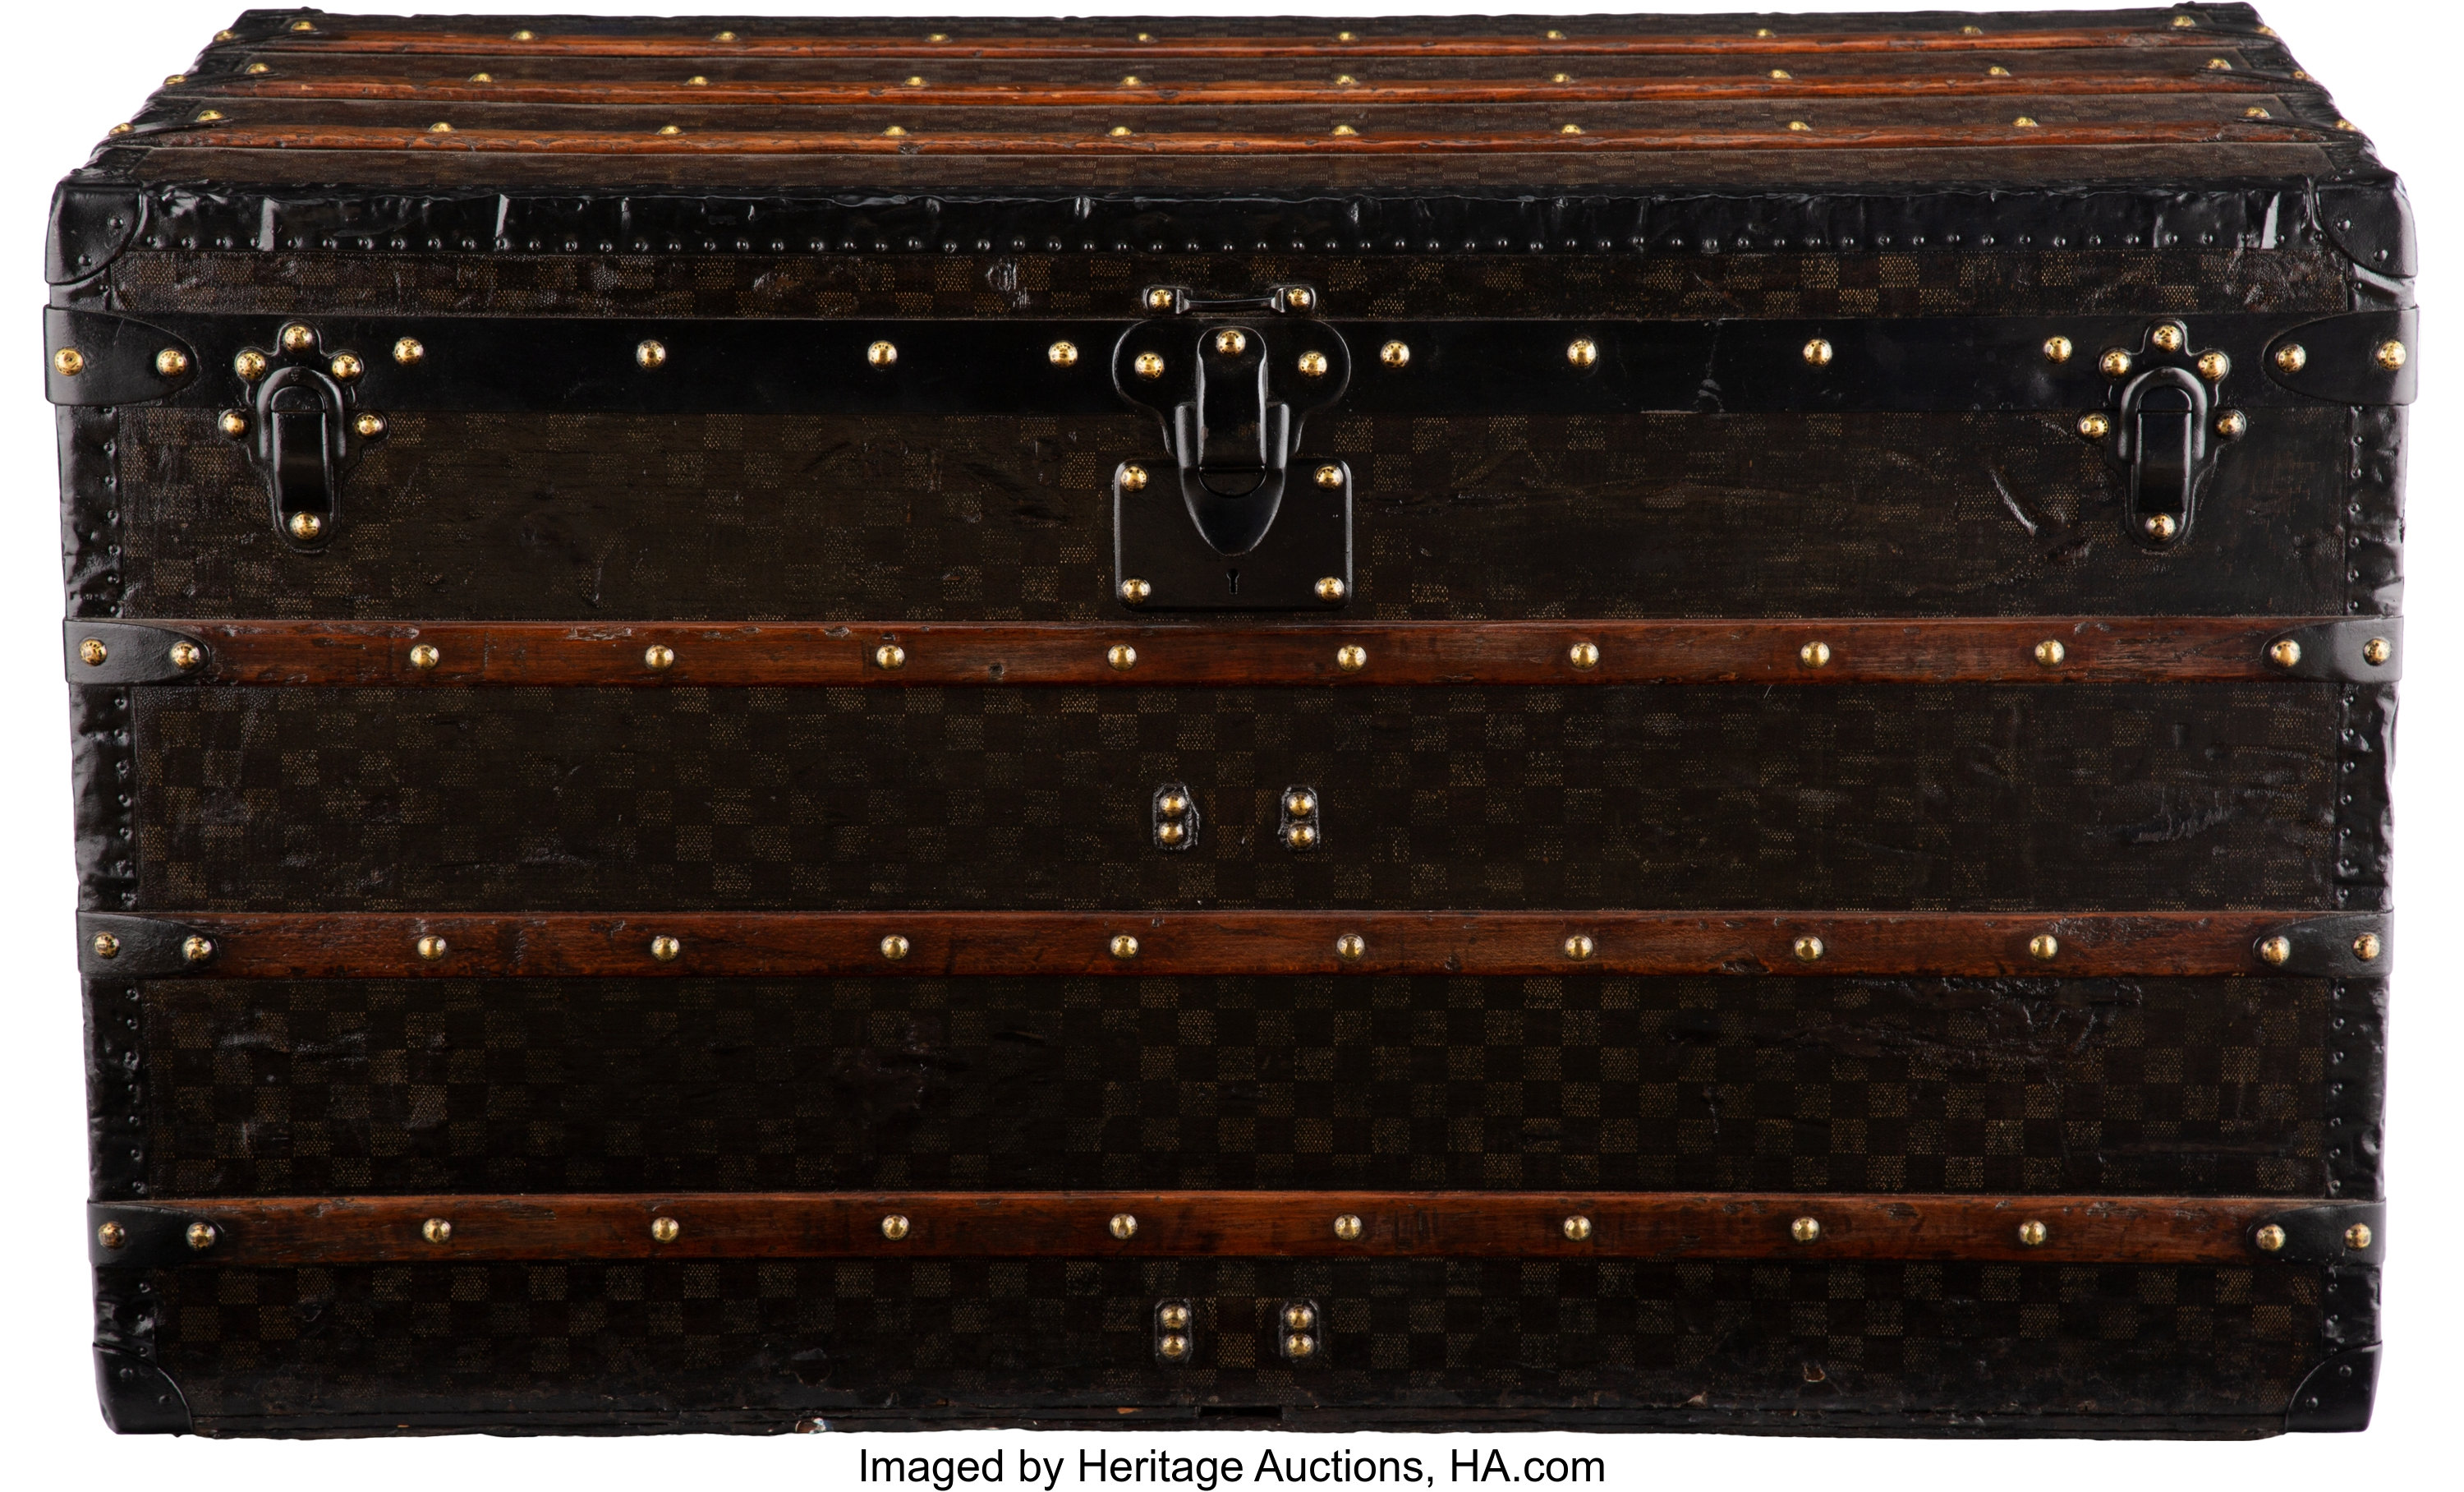 At Auction: Louis Vuitton, LOUIS VUITTON STEAMER TRUNK. AS FOUND HEAVY WEAR.